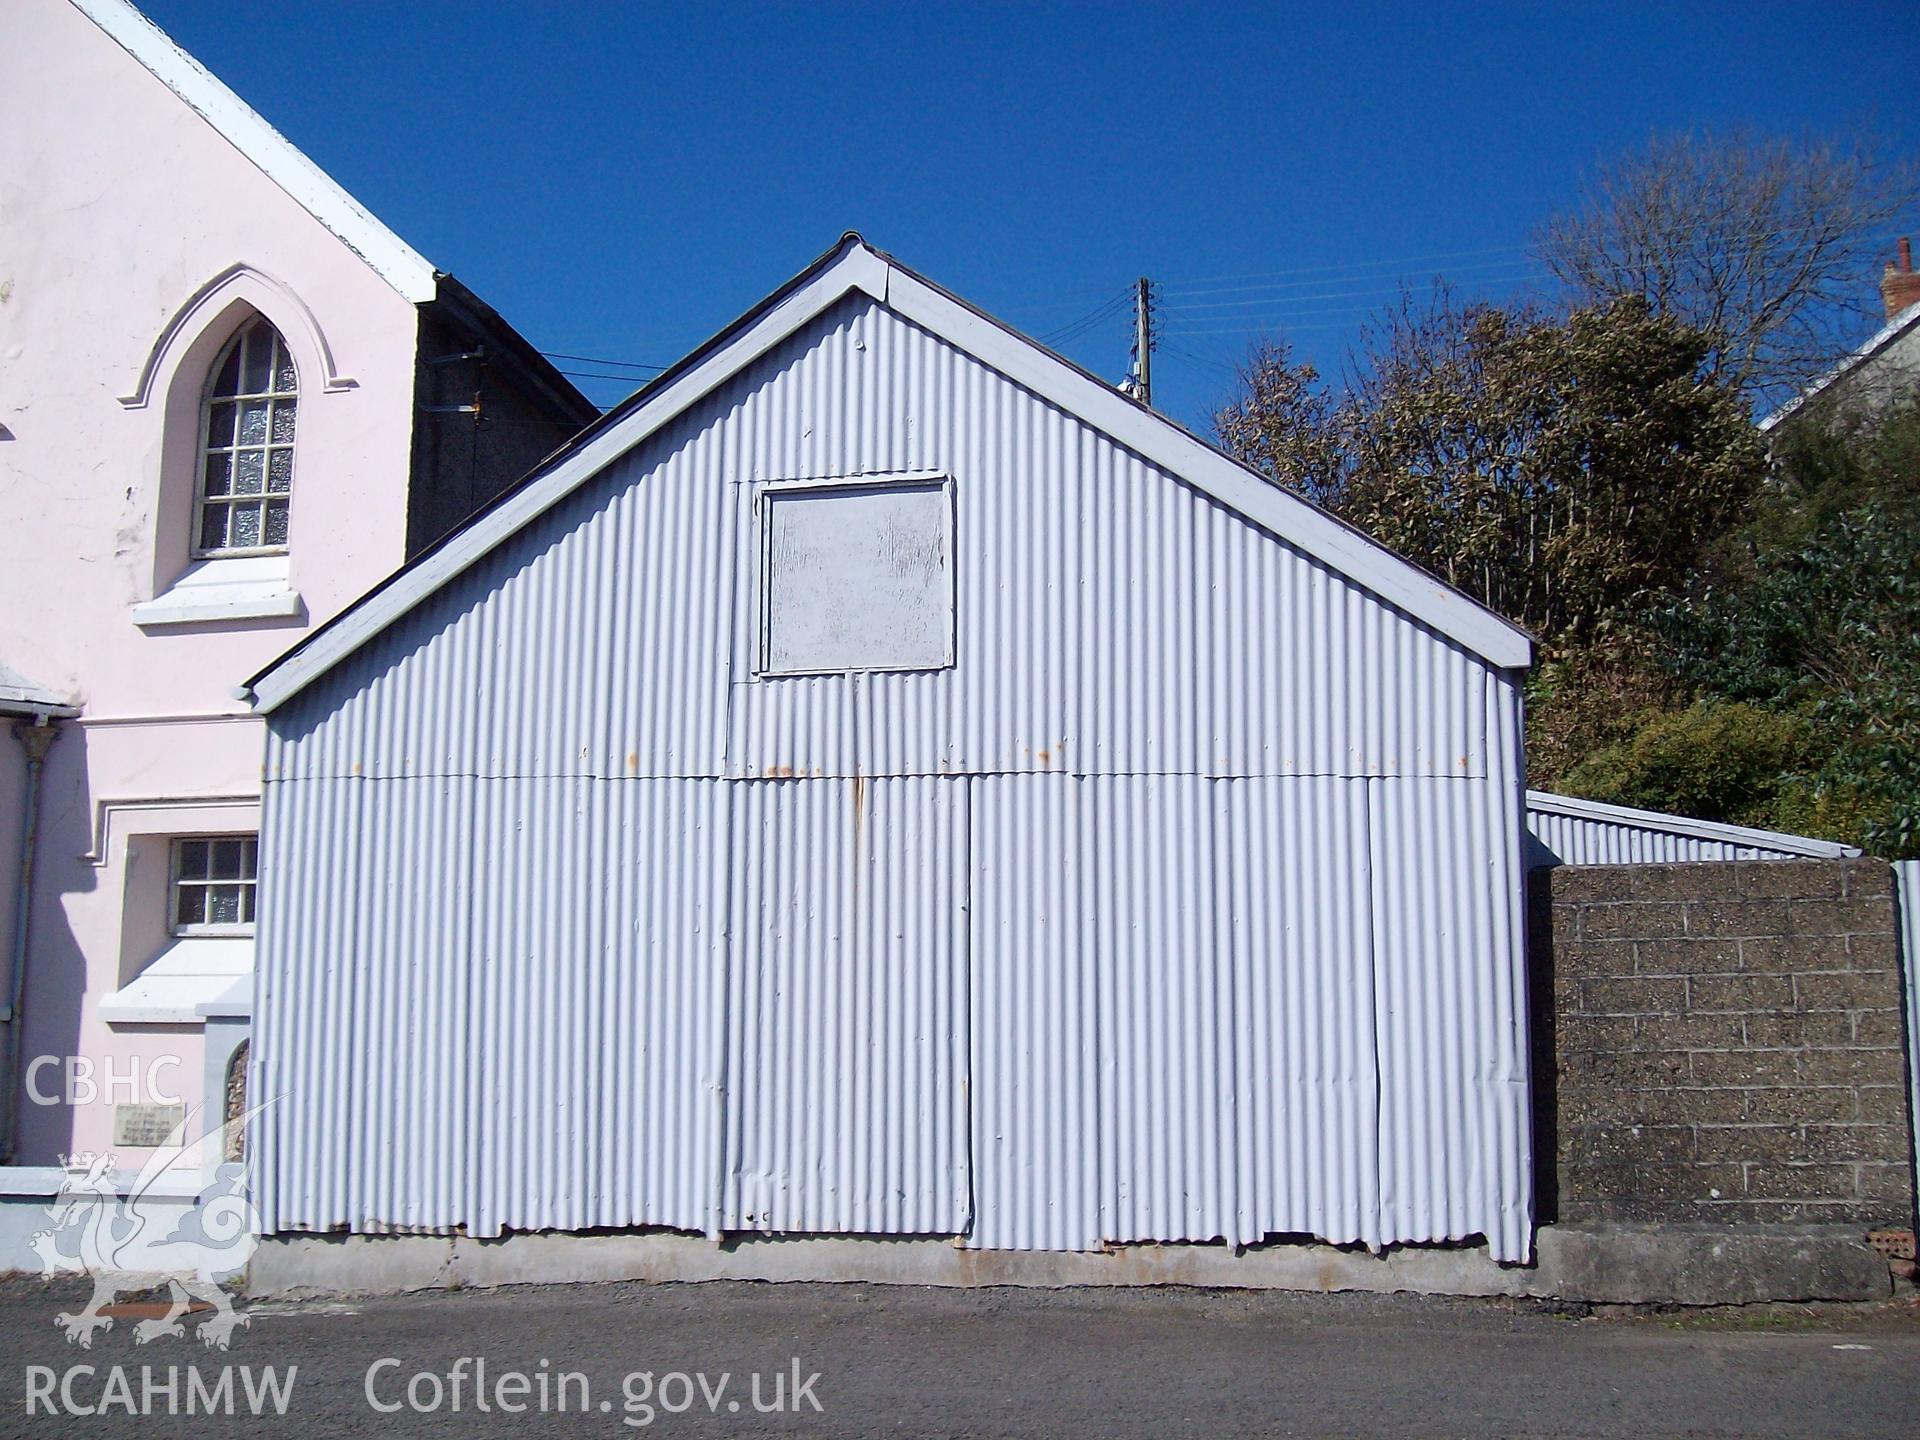 Digital image relating to Ebenezer Chapel Vestry, Goodwick, Pembrokeshire: exterior.